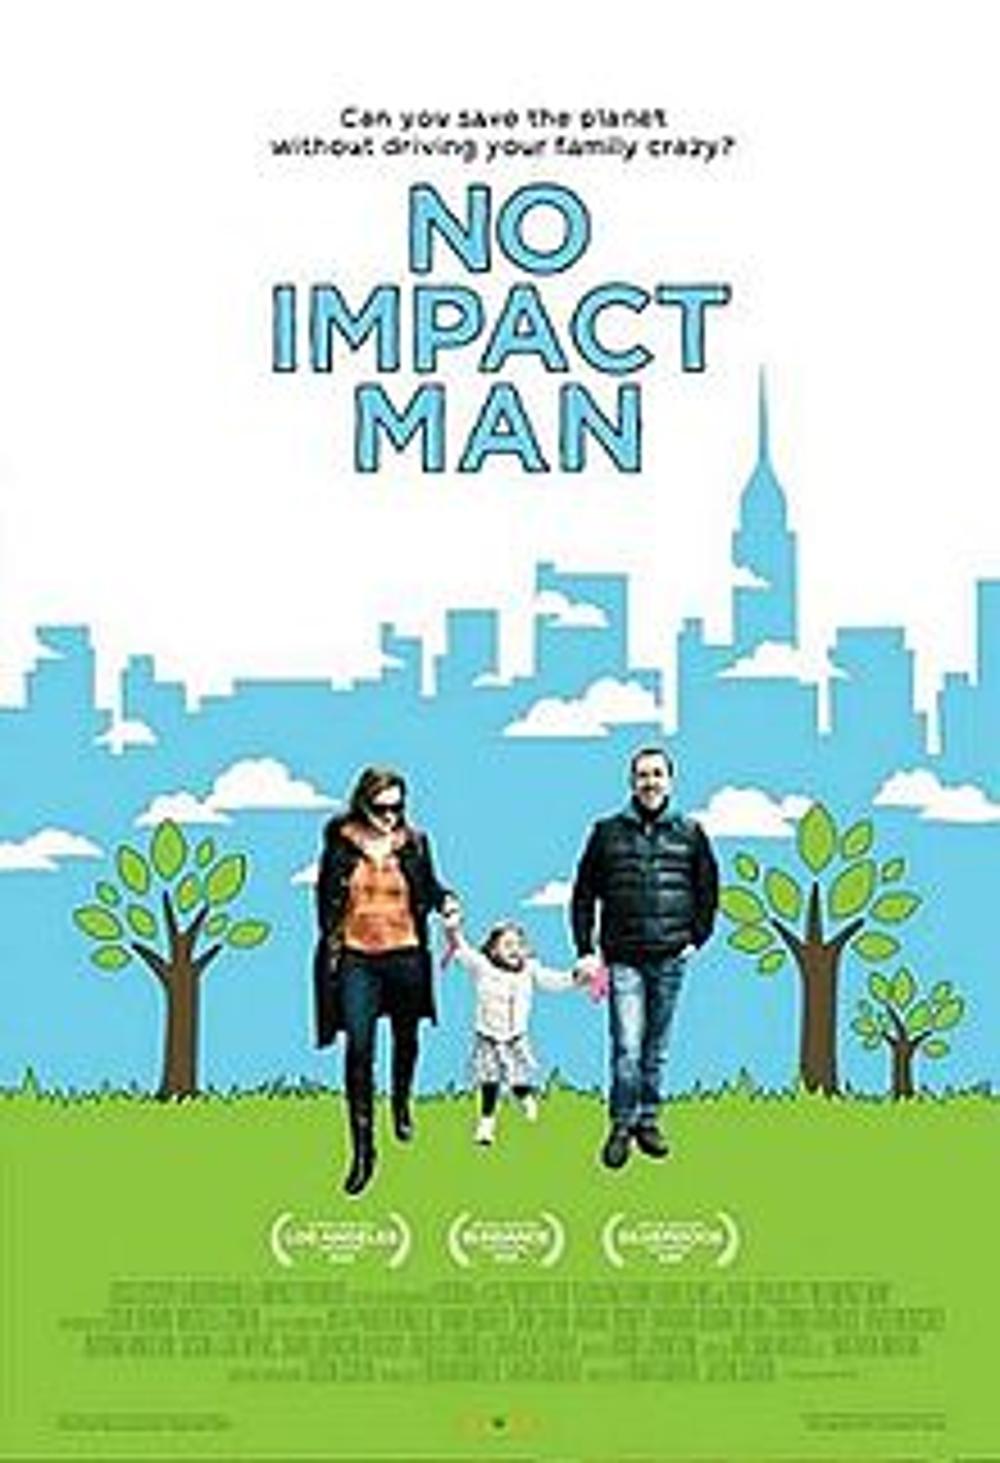 No impact man movie advertisement